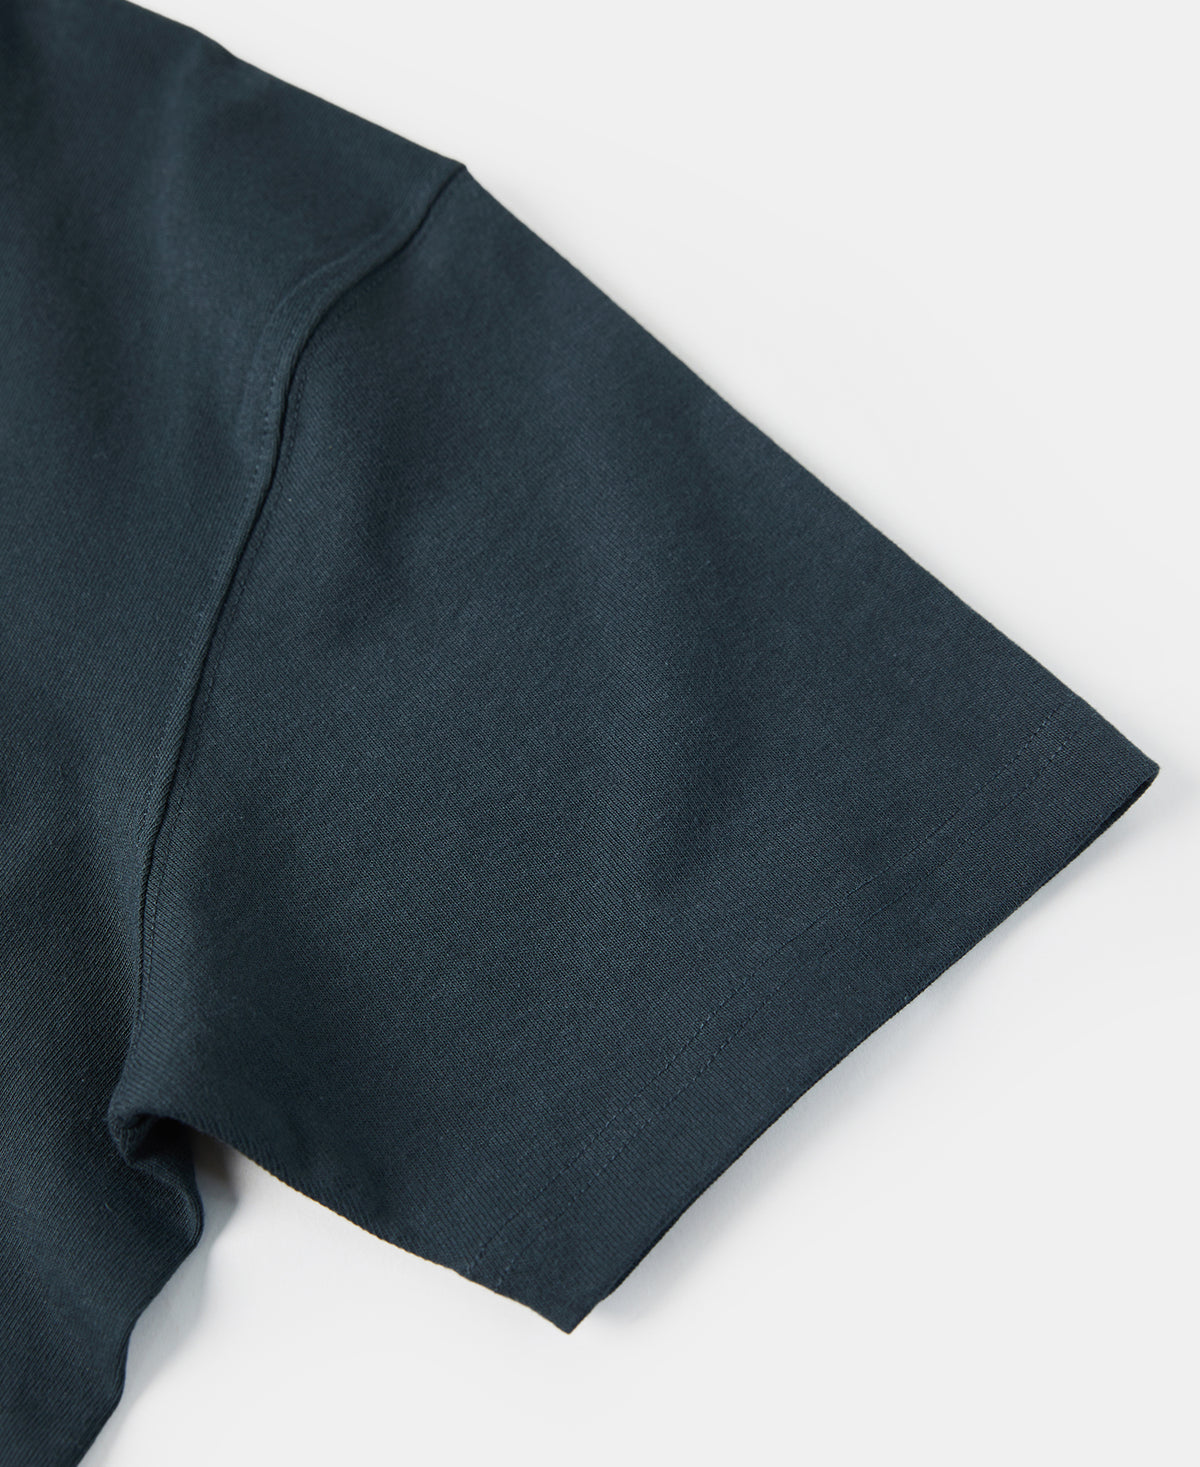 9 oz US Cotton Tubular T-Shirt - Vintage Black